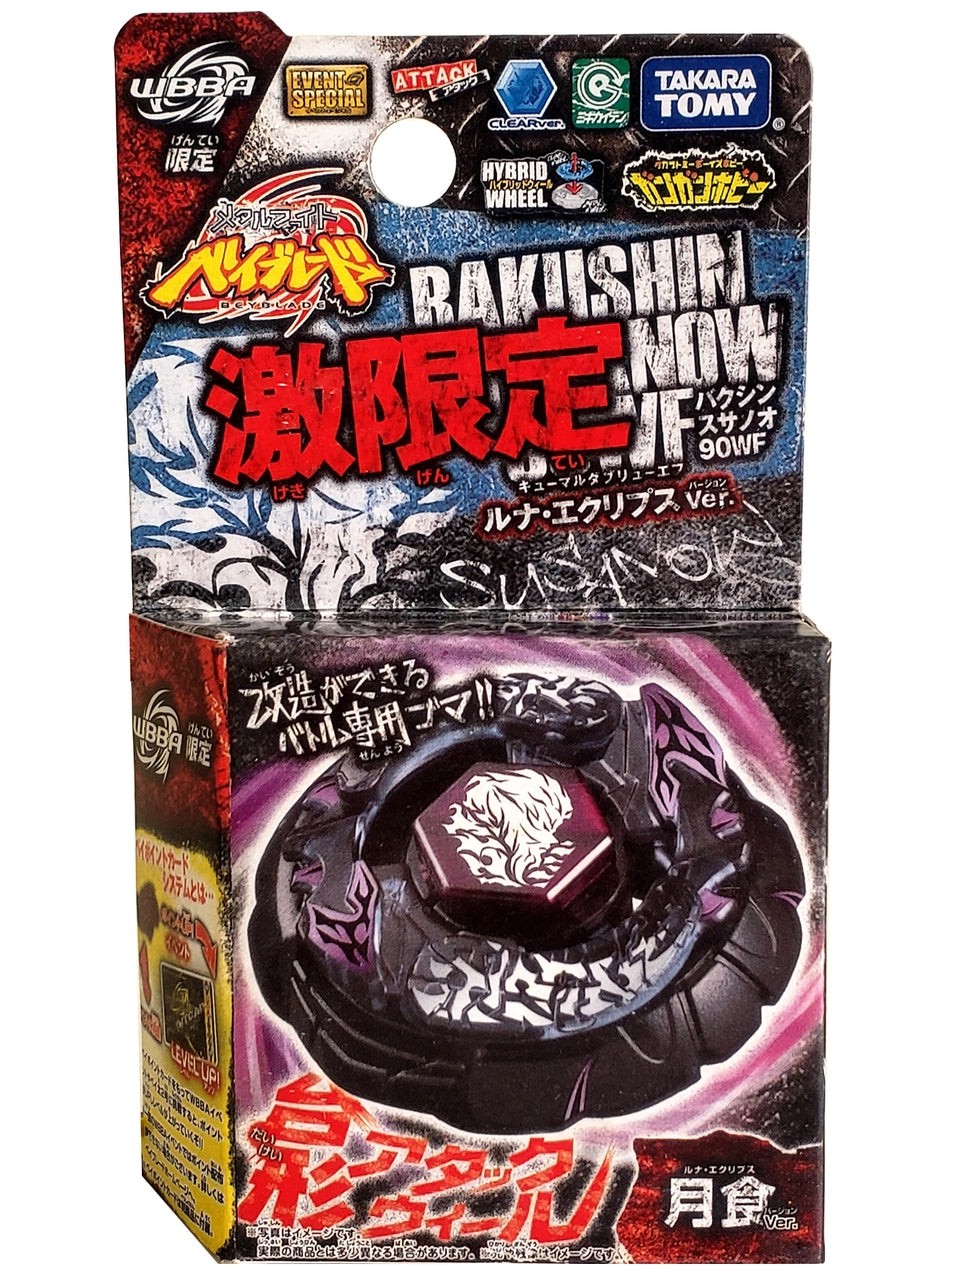 TAKARA TOMY Beyblade Metal Fusion Bakushin Susanow 90WF Top (Lunar Eclipse Version)